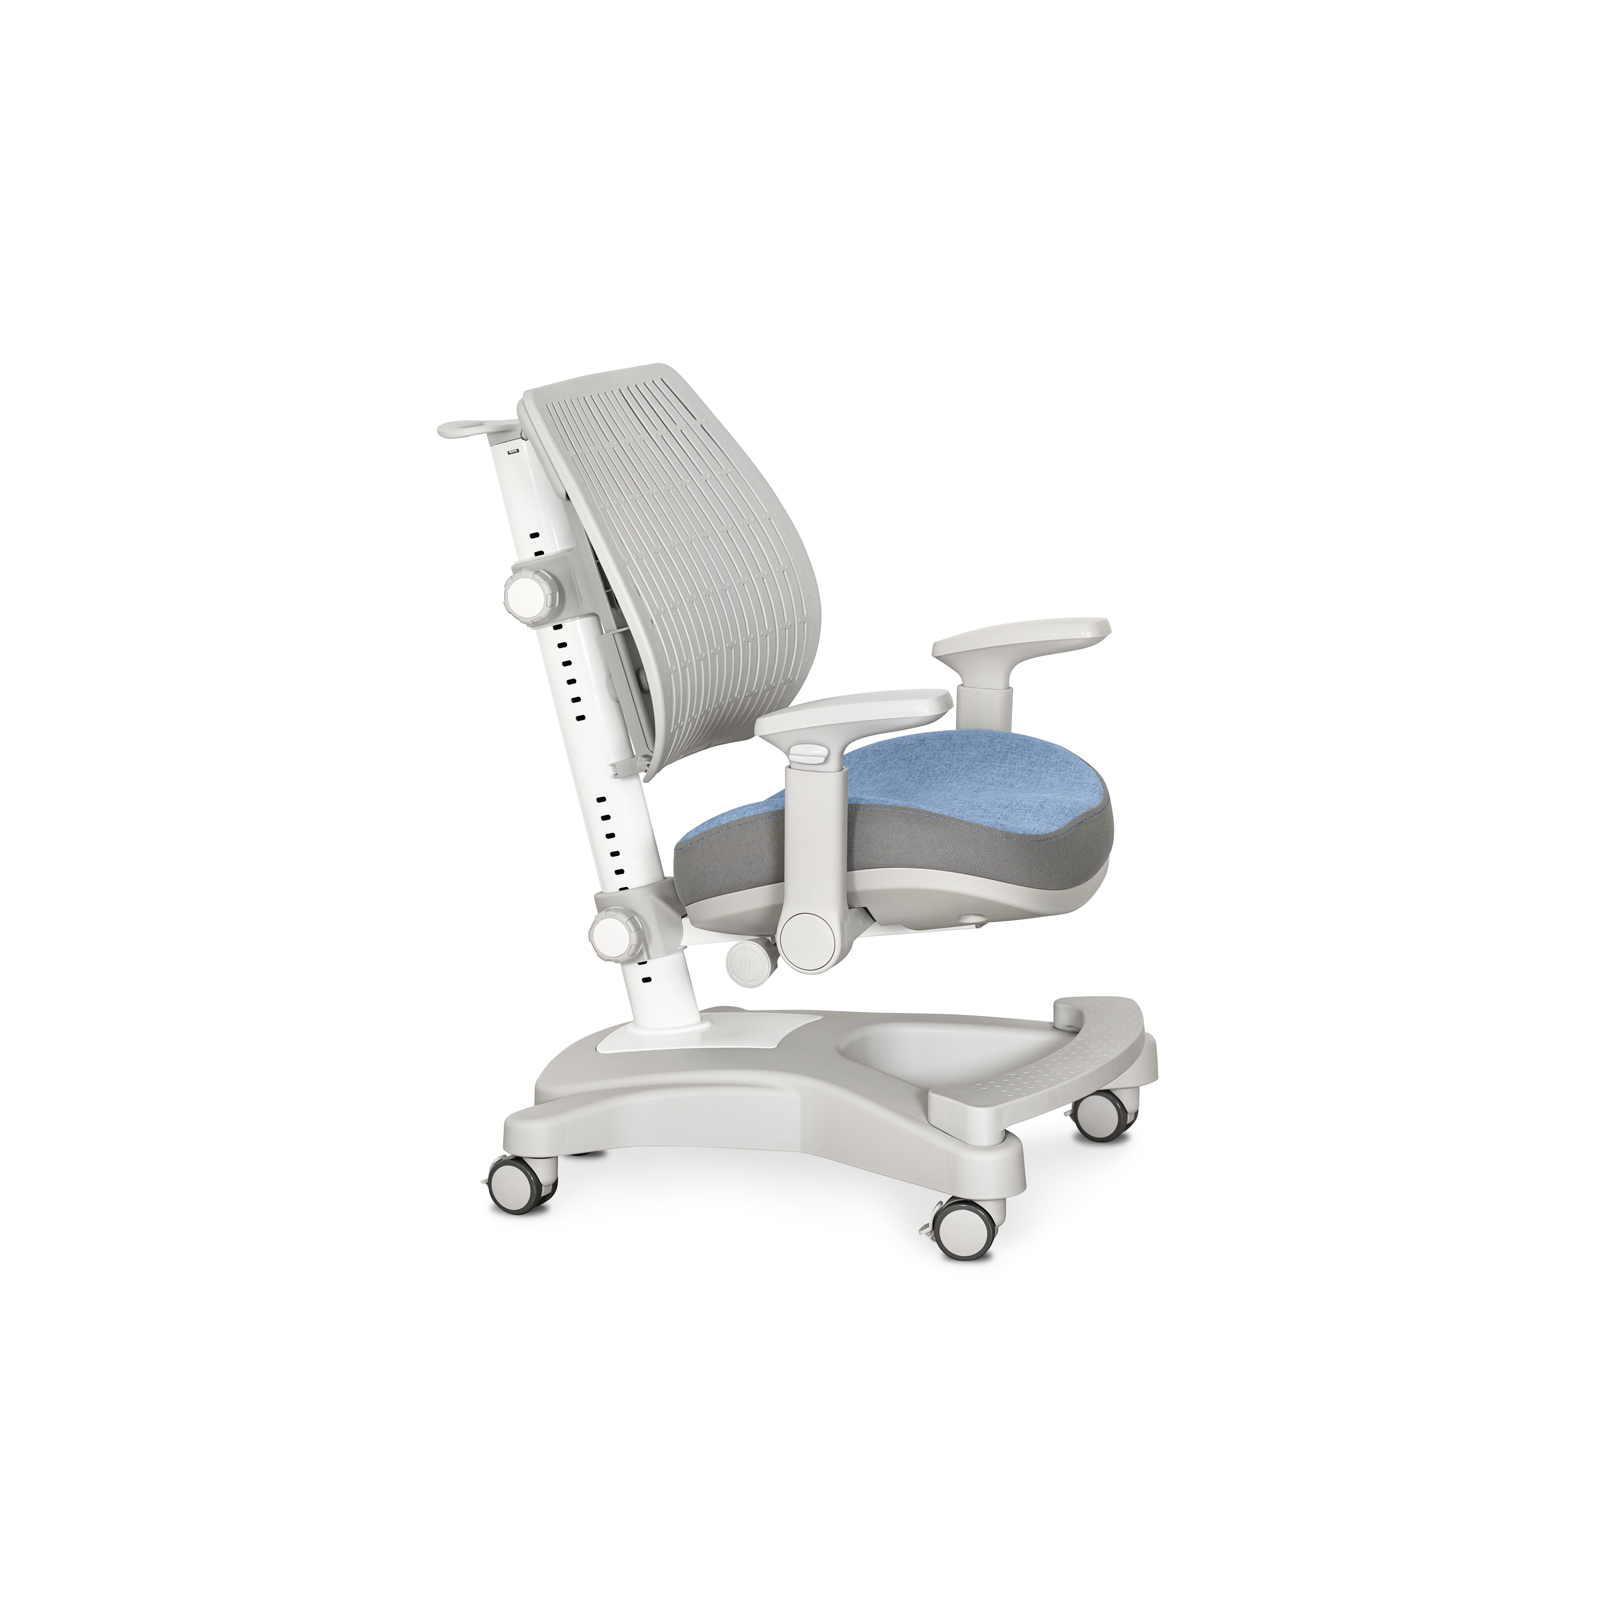 Дитяче крісло Mealux Softback Pink (Y-1040 KP)